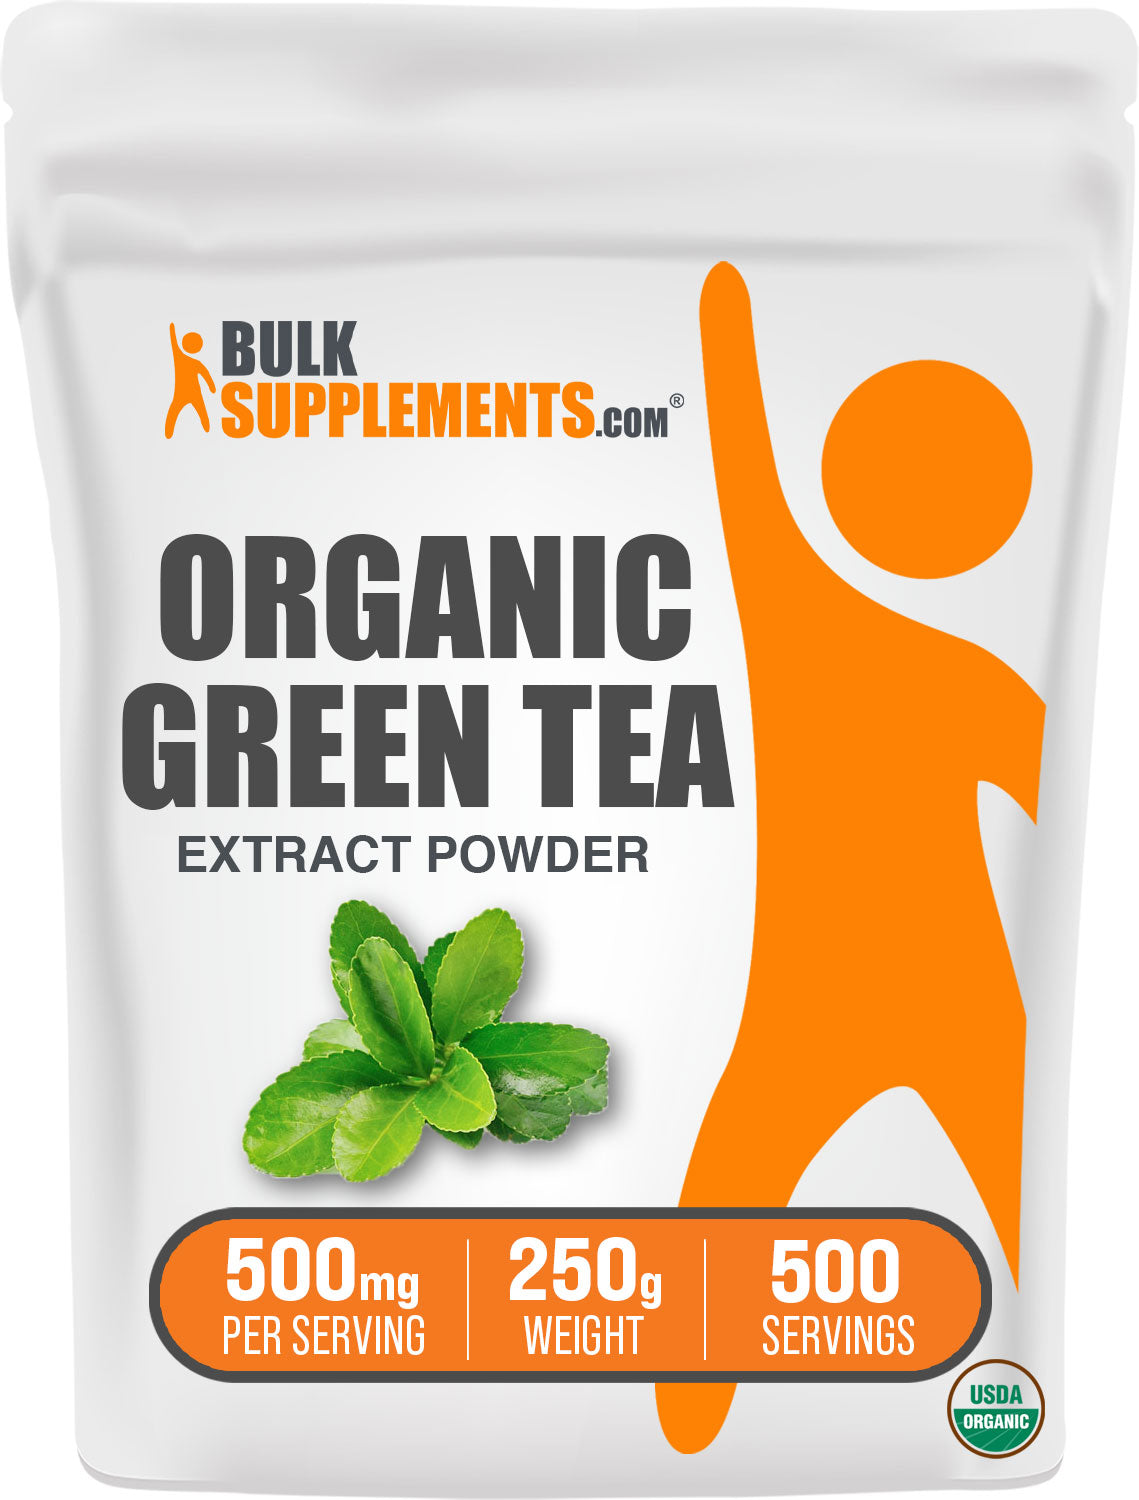 BulkSupplements.com Organic green tea extract powder 250g bag